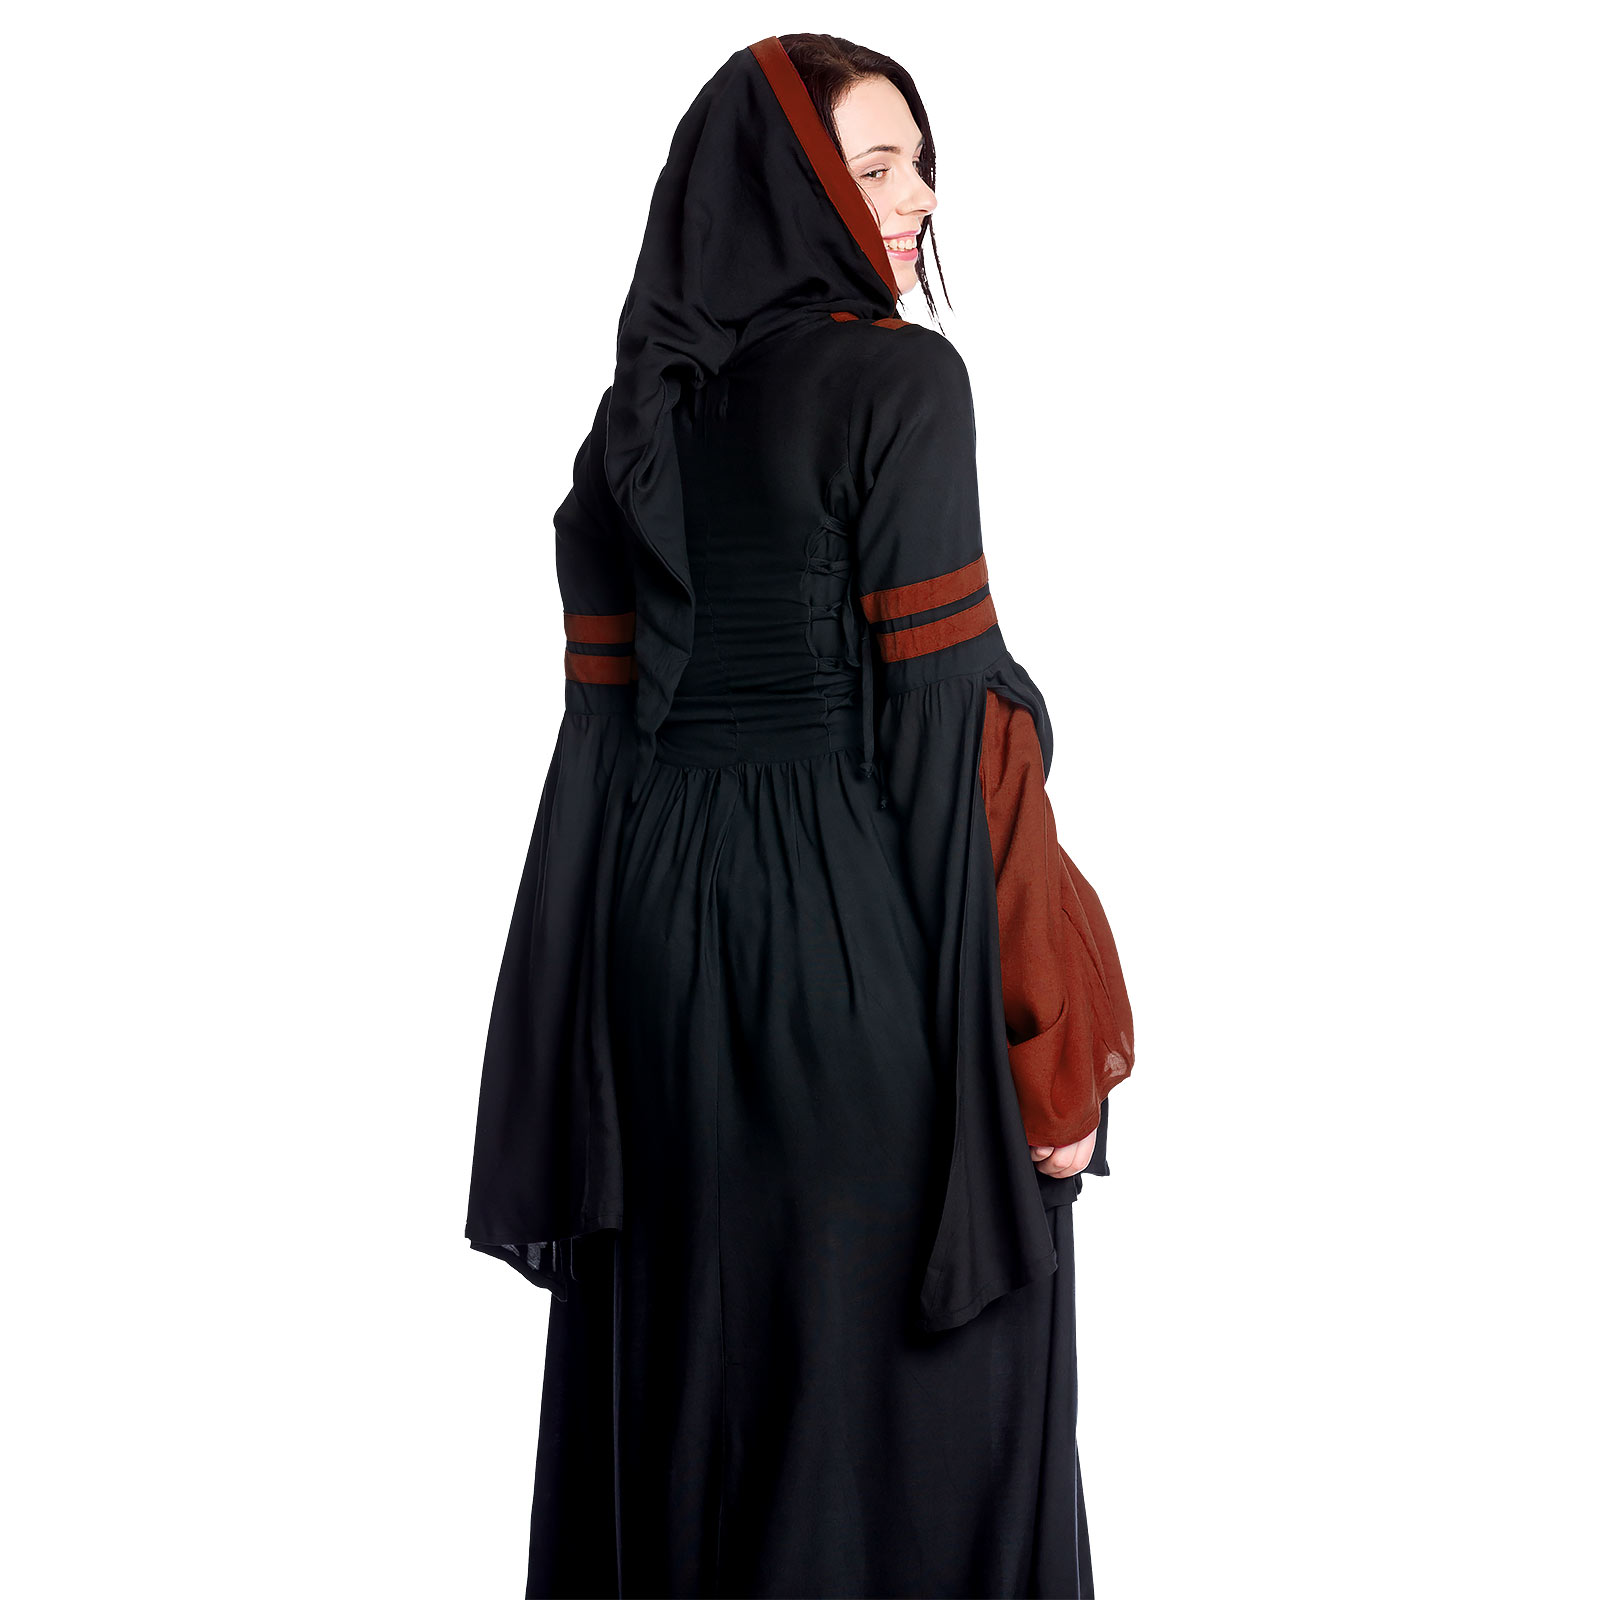 Medieval Hooded Dress Isolde Black-Red